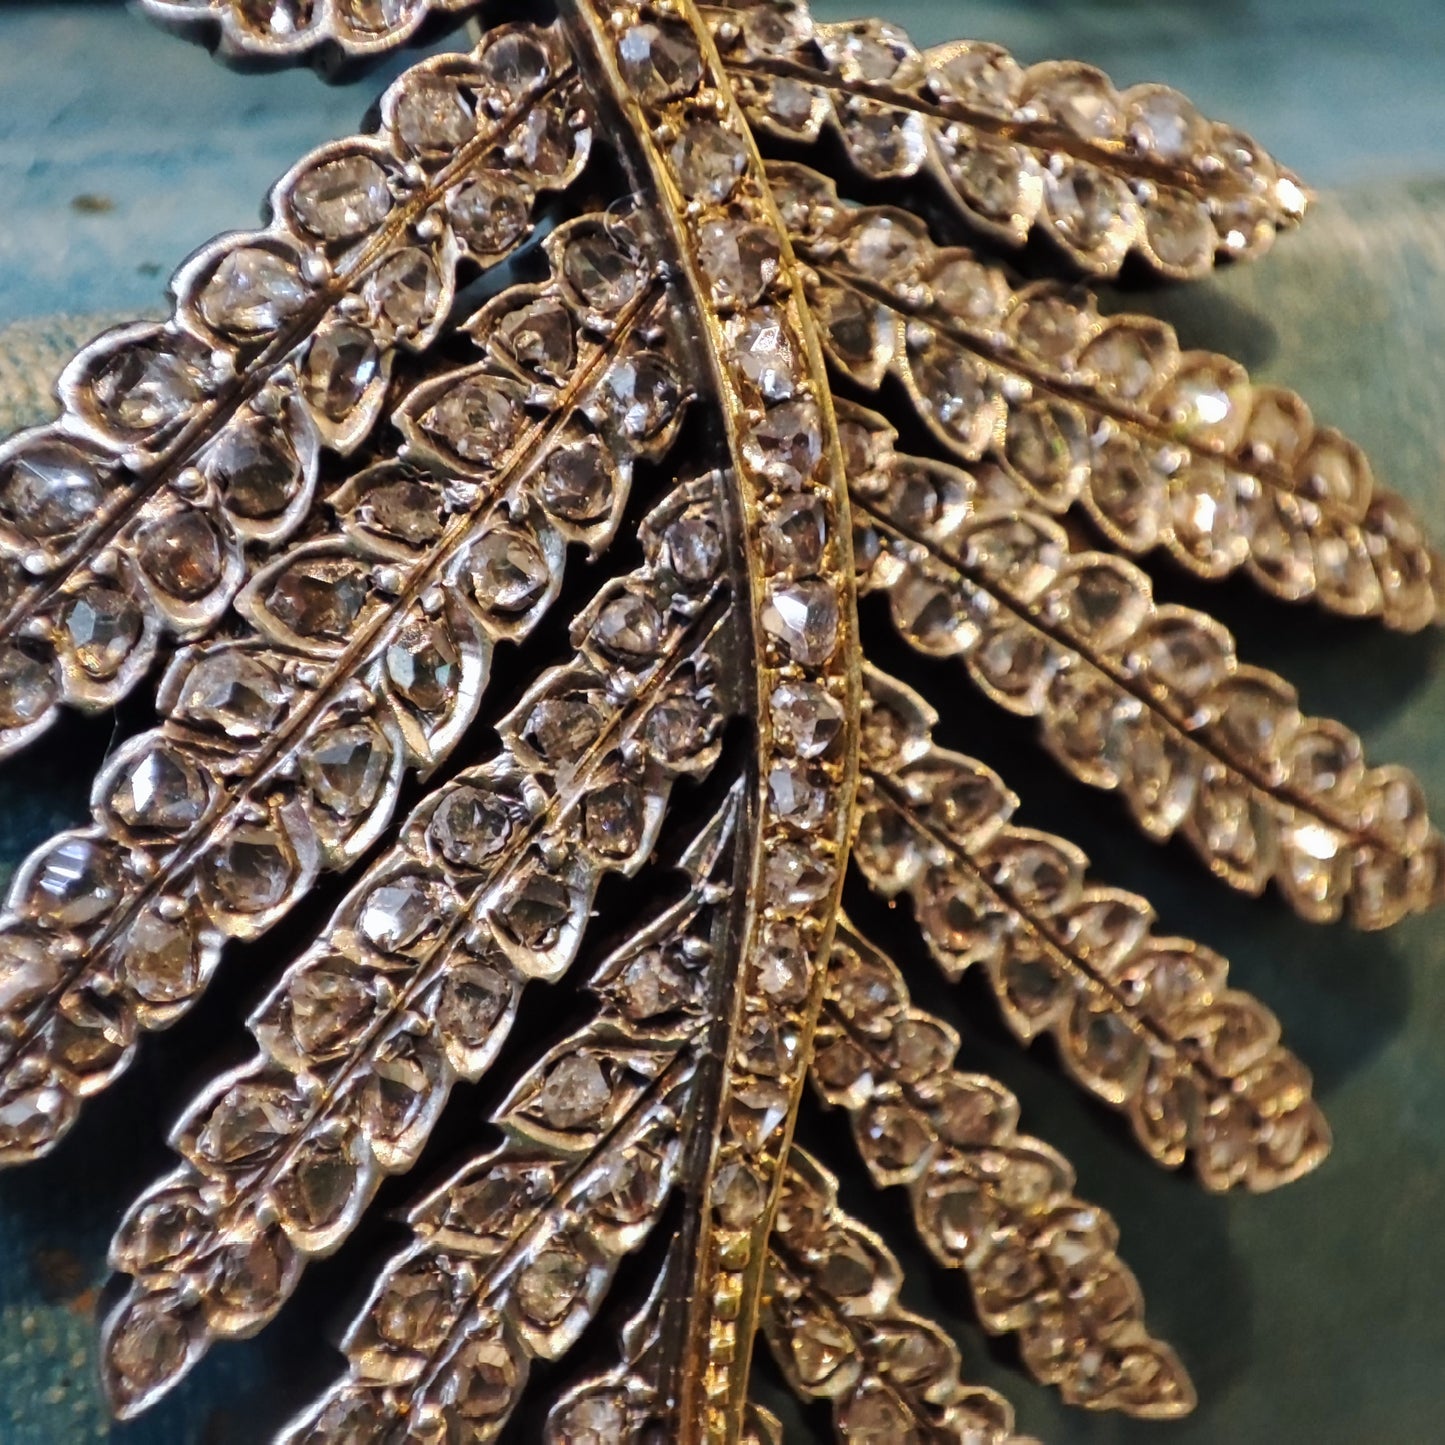 c.1880's Antique Diamond Leaf Pendant in 15ct Rose Gold & Silver 1.10tcw